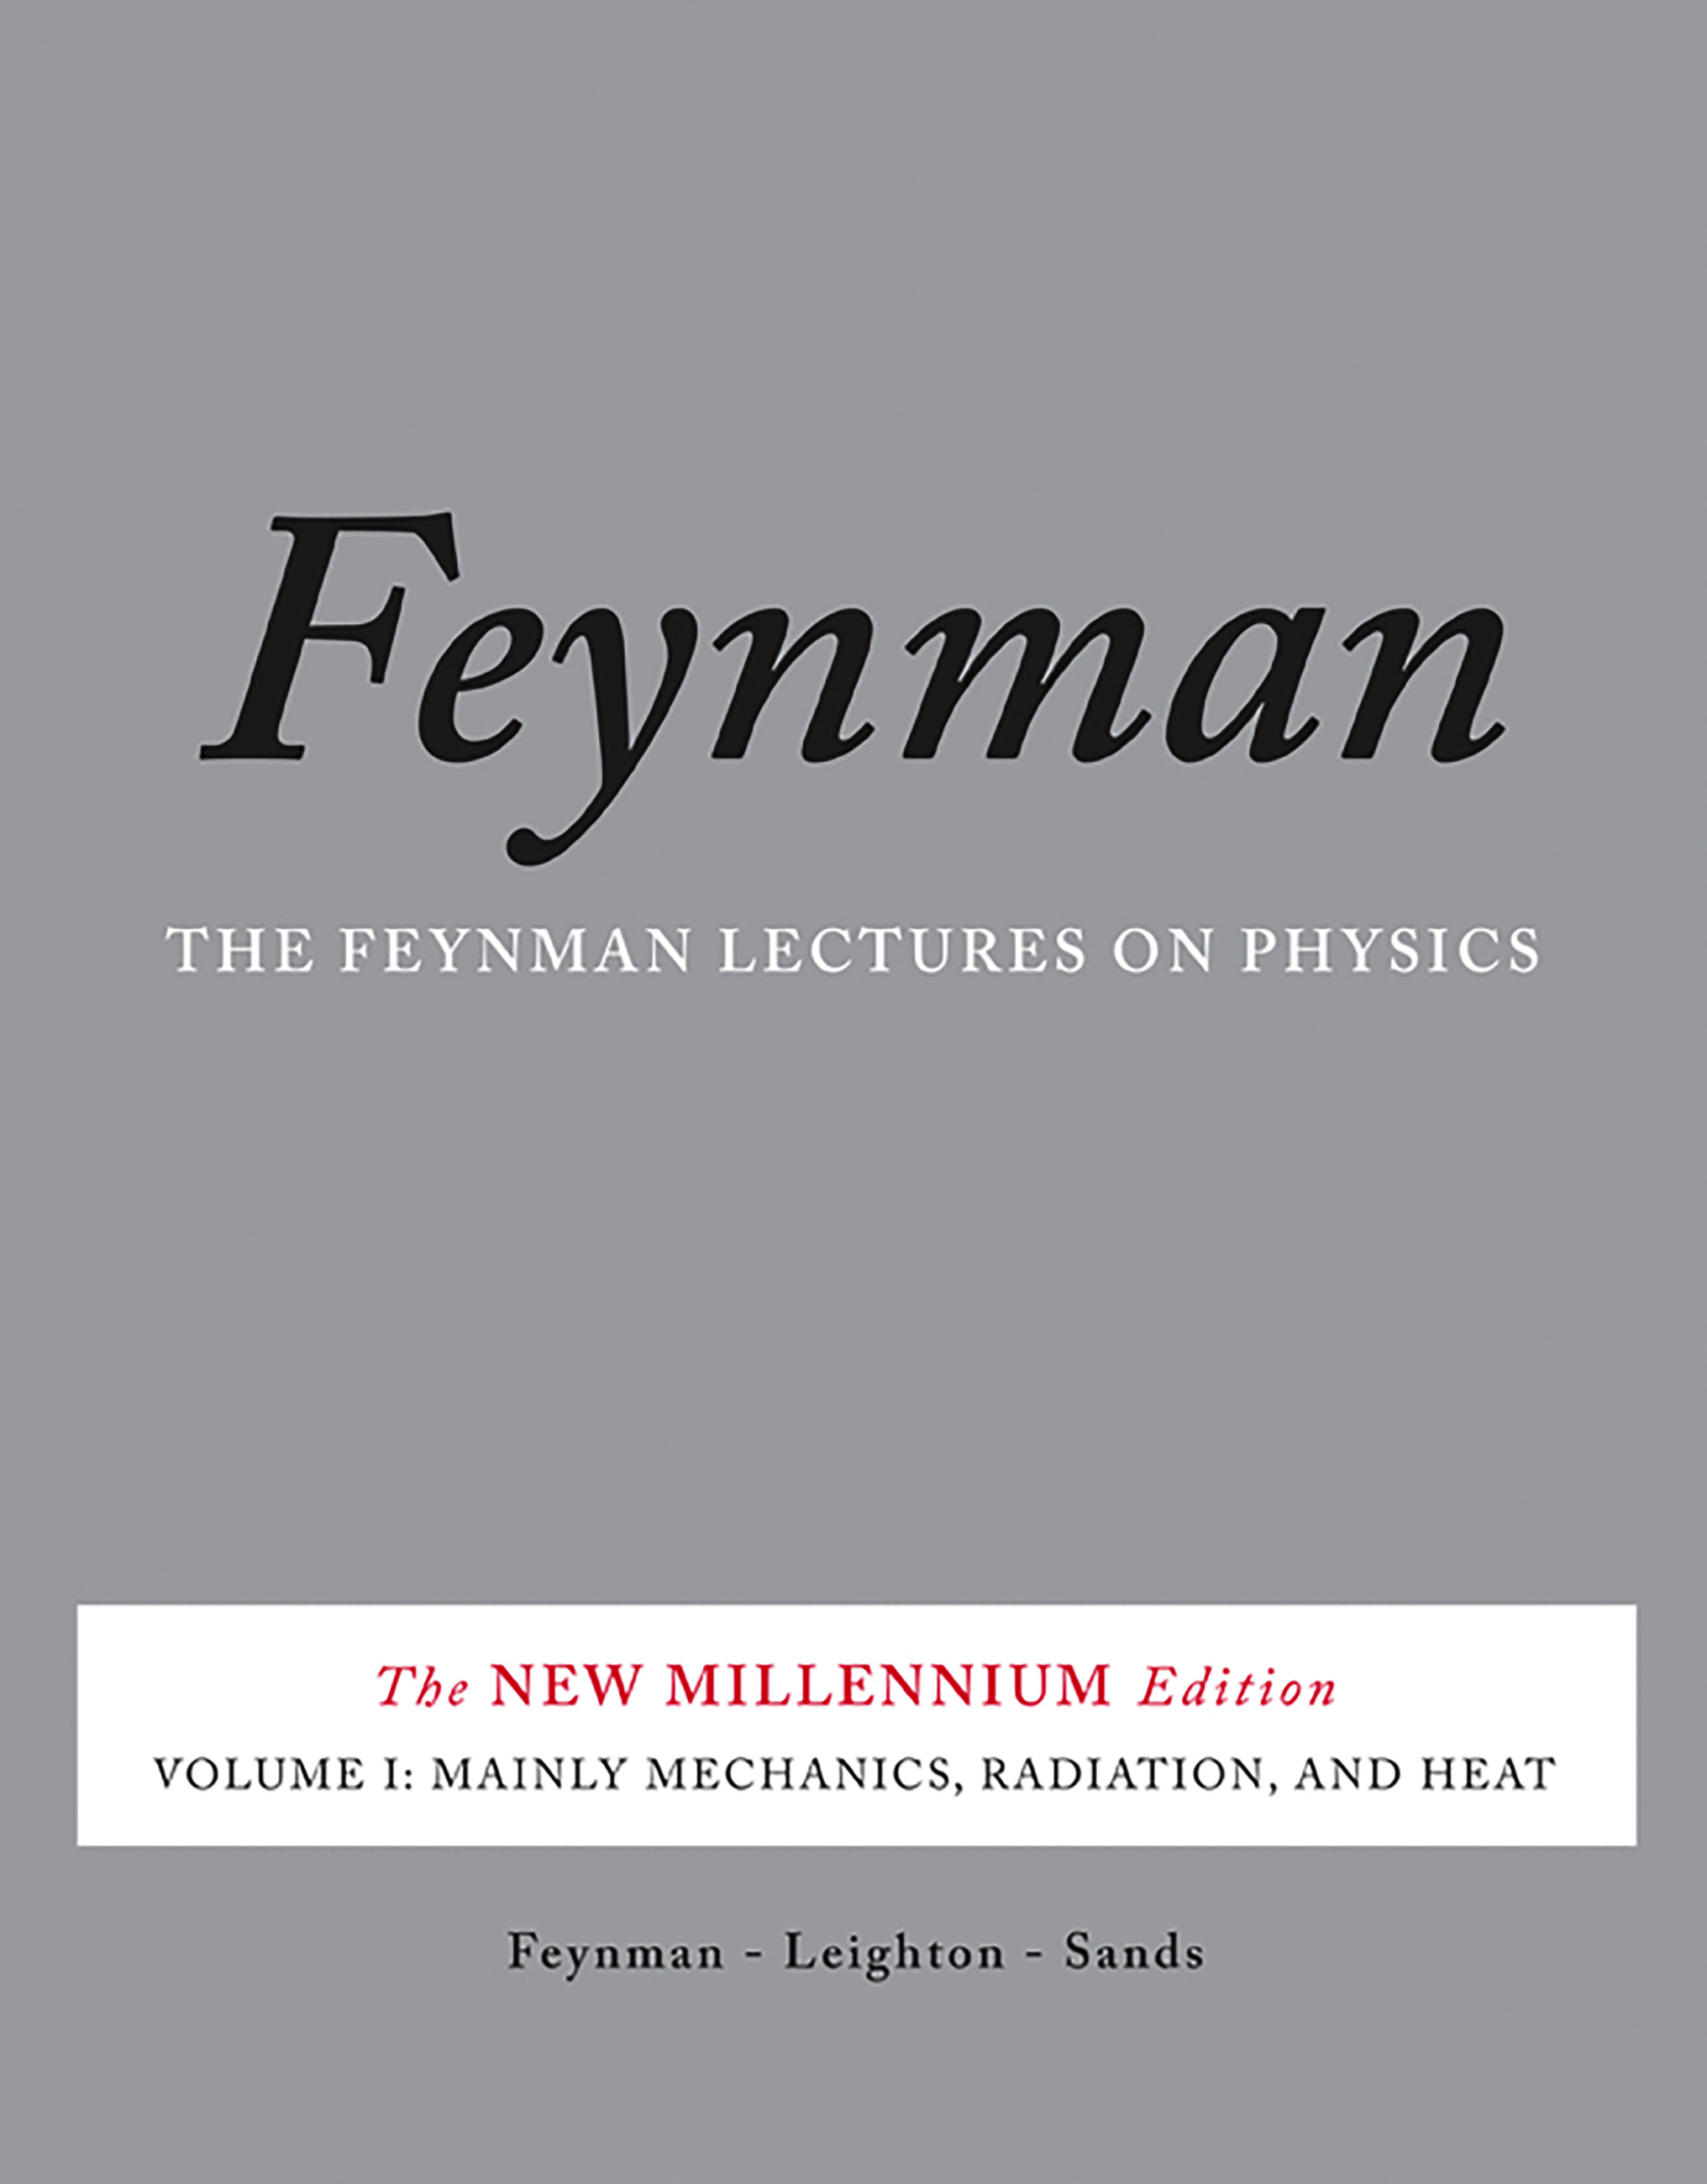 The Feynman Lectures on Physics, Vol. I by Richard P. Feynman